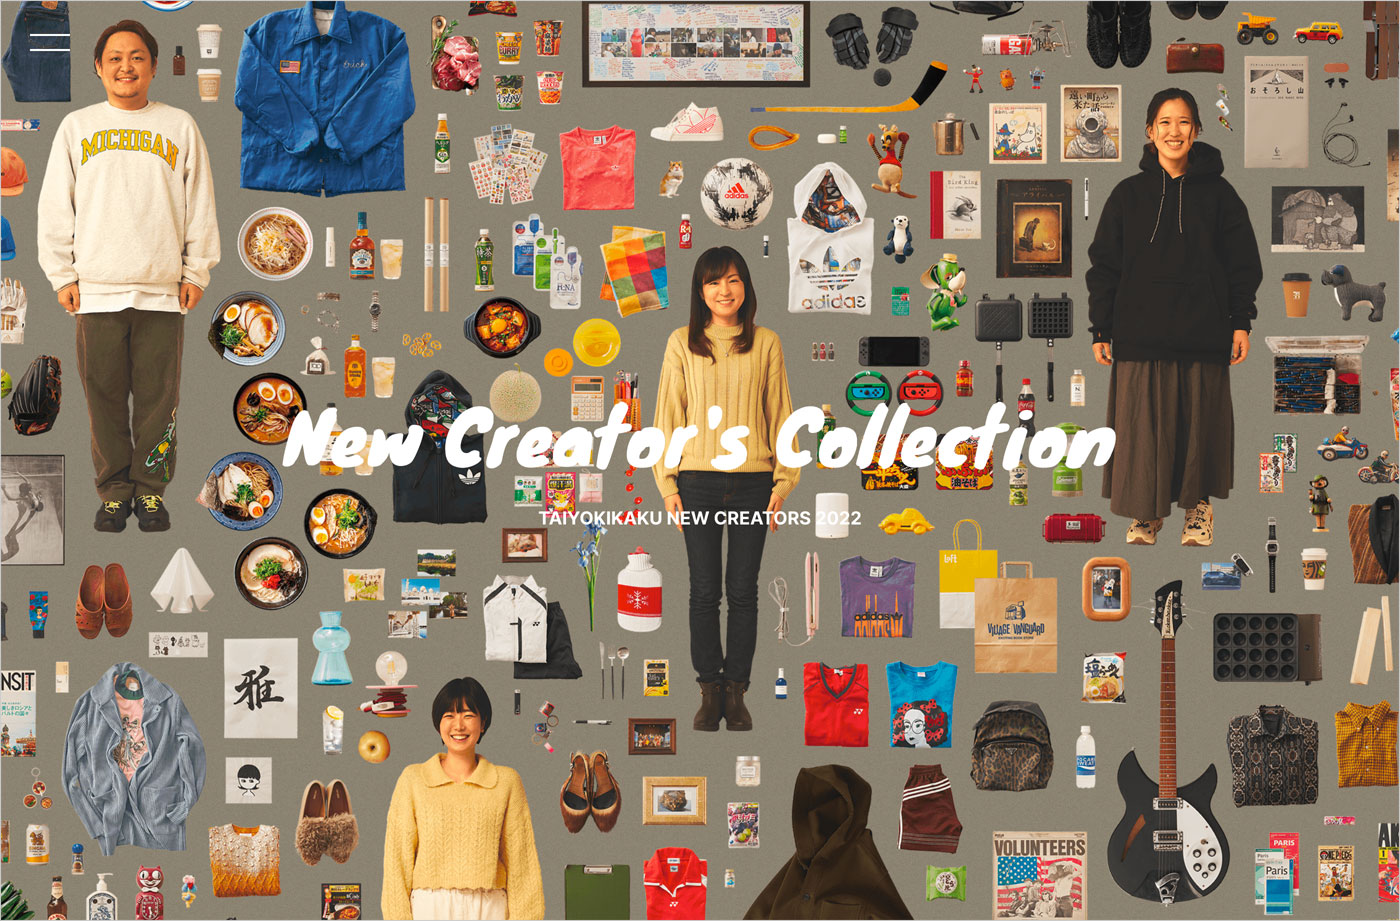 TAIYO KIKAKU「New Creator’s Collection」ウェブサイトの画面キャプチャ画像